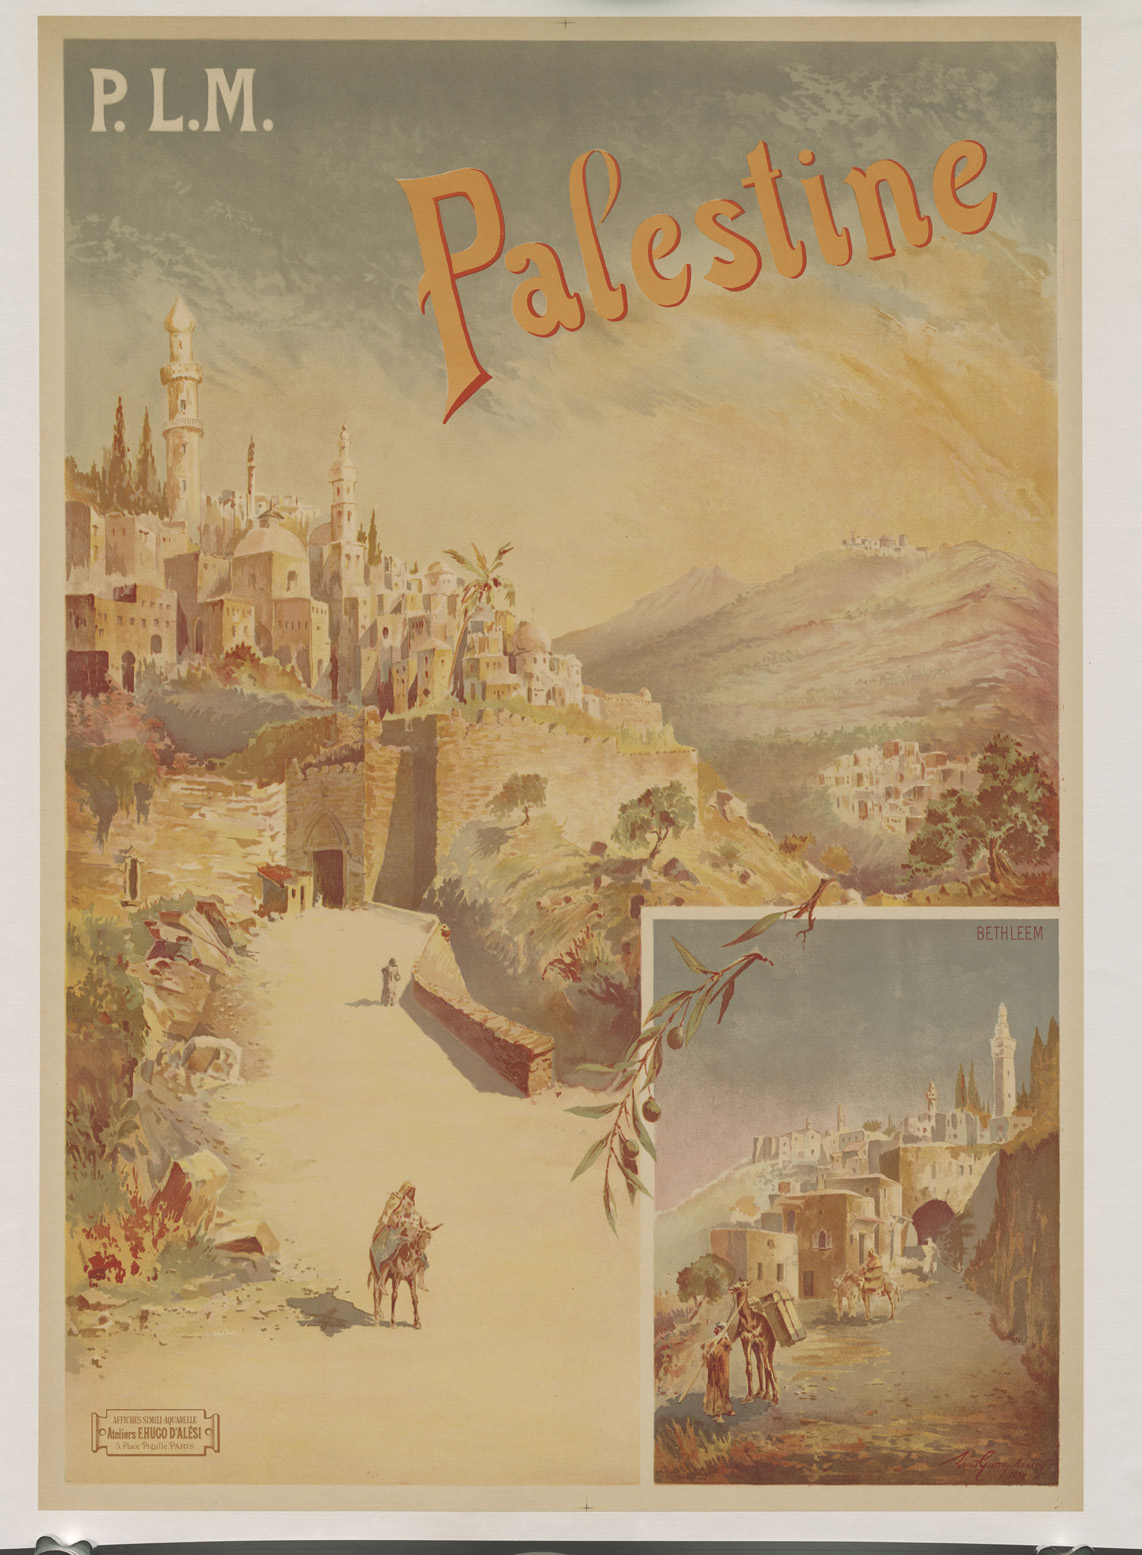 1898 French Railway Travel Poster Advertising Palestine